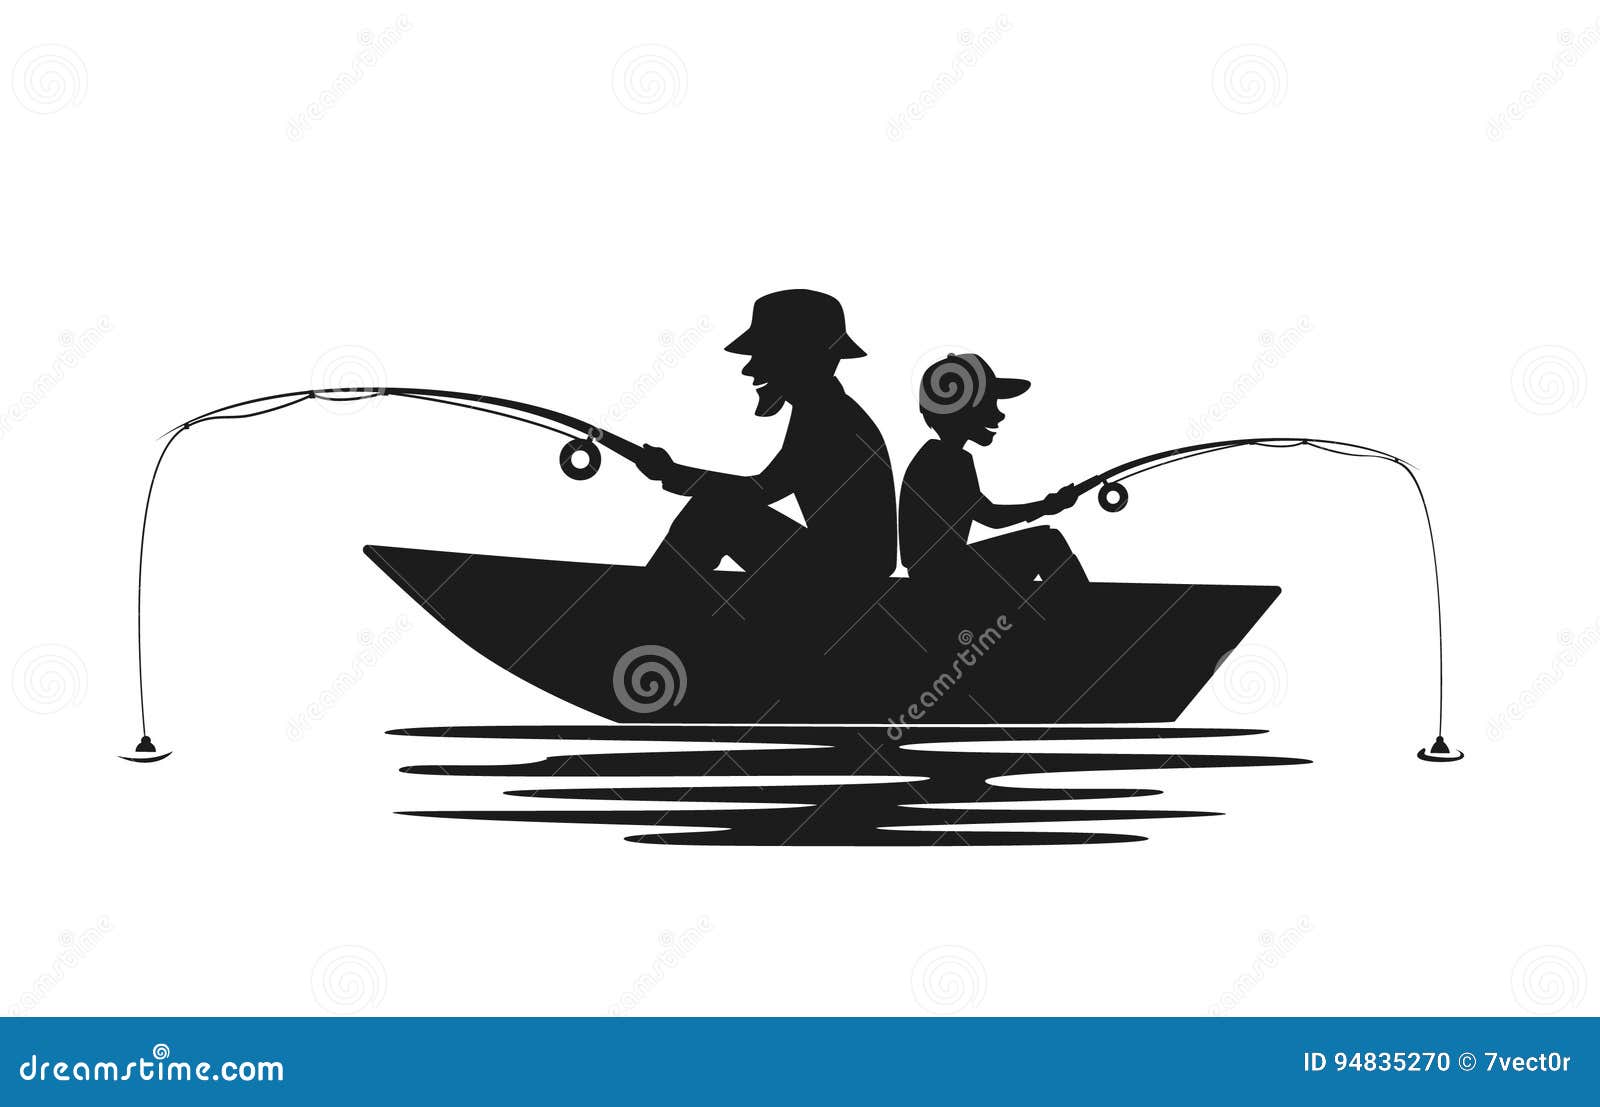 Fishing Silhouette Stock Illustrations – 64,331 Fishing Silhouette